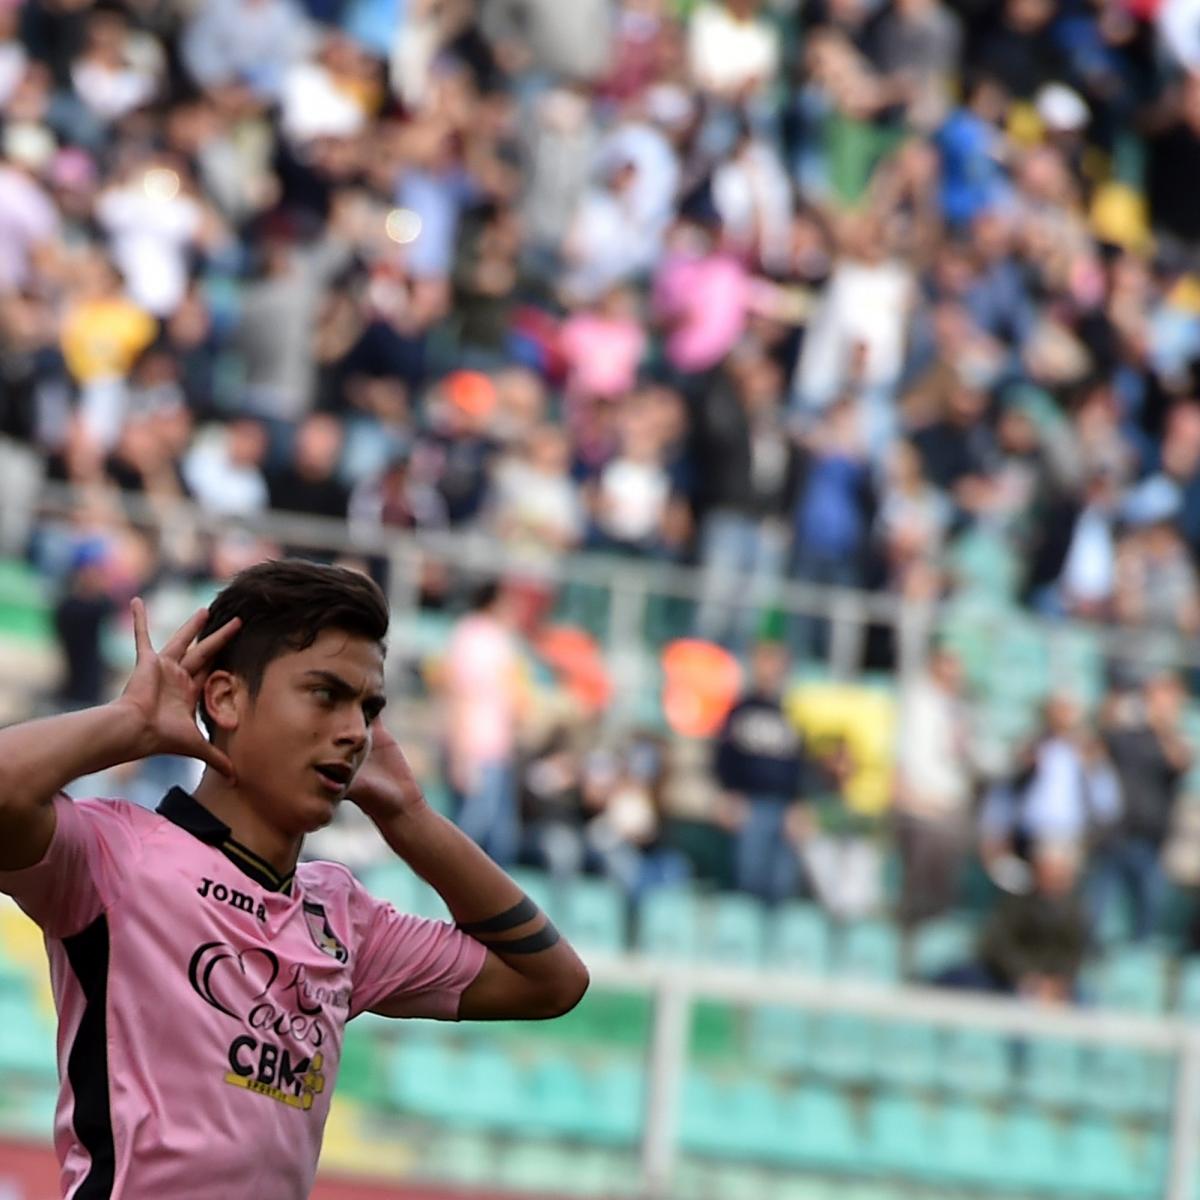 Palermo 2015/16 Joma Home, Away and Third Kits - FOOTBALL FASHION